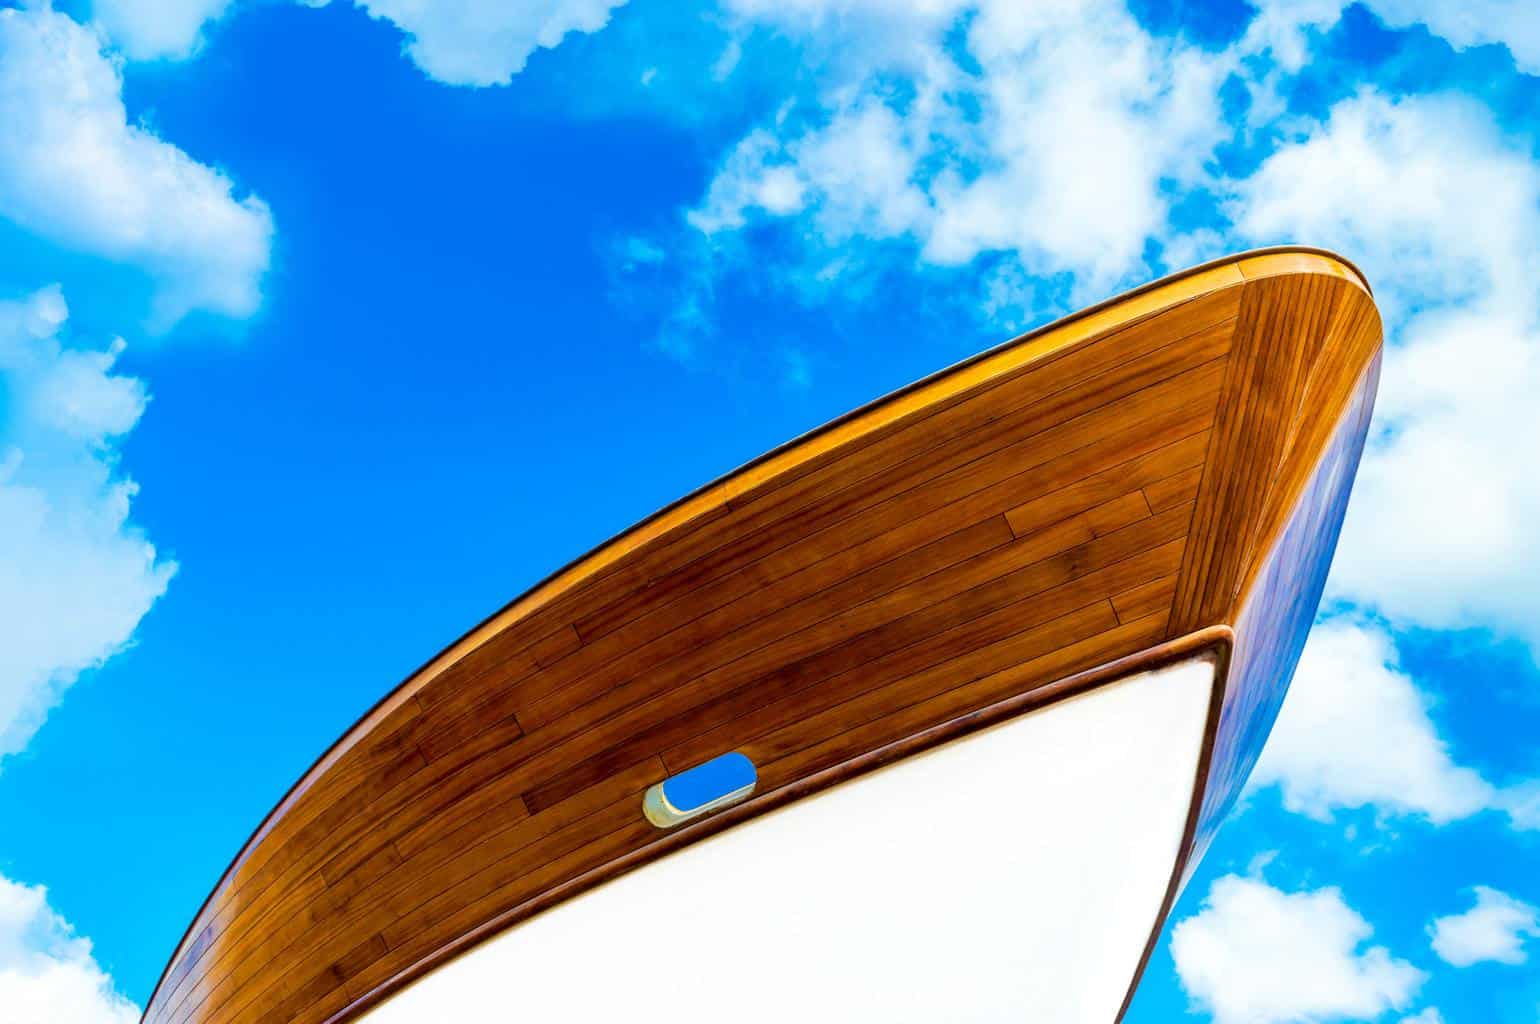 A close up shot of a shiny boat